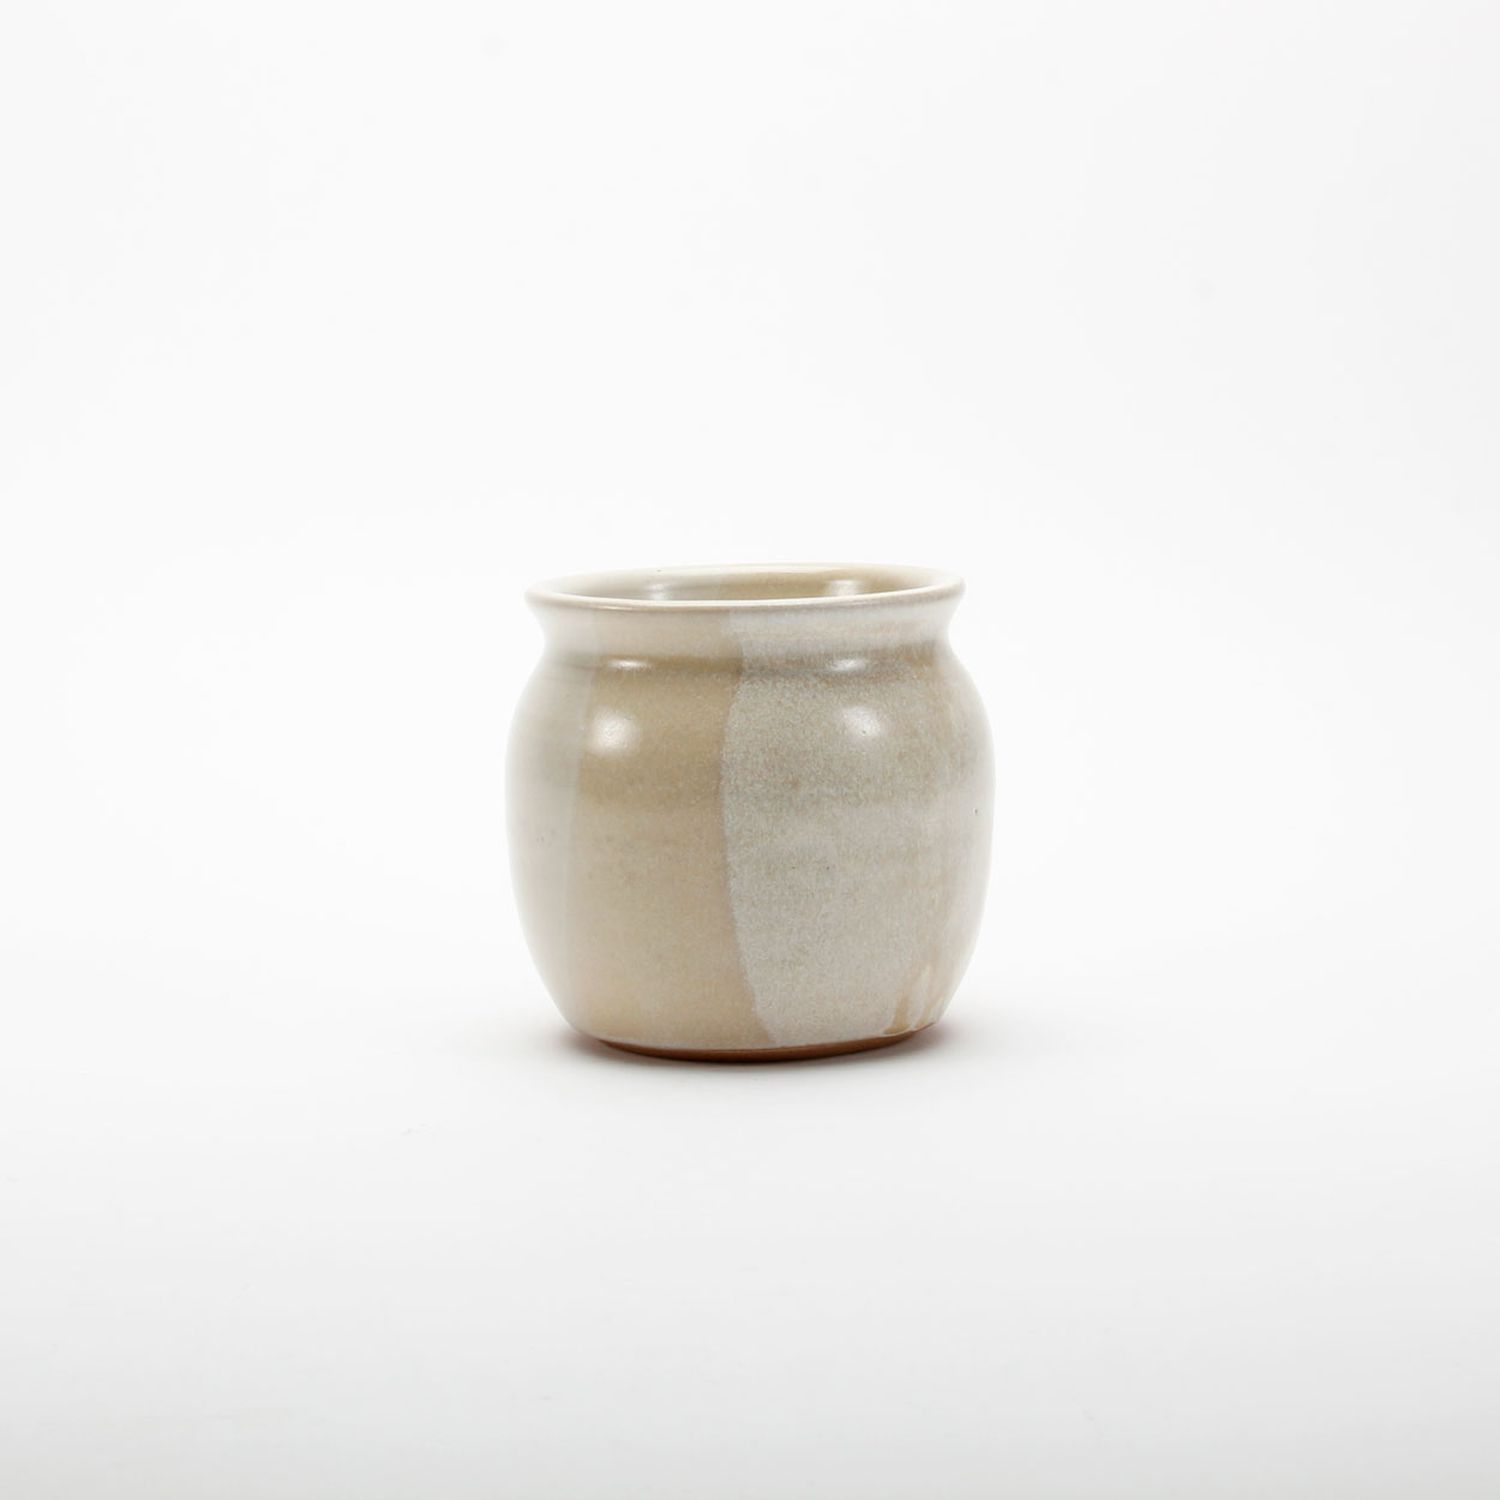 Danielle Skentzos: Medium Vase Product Image 1 of 2